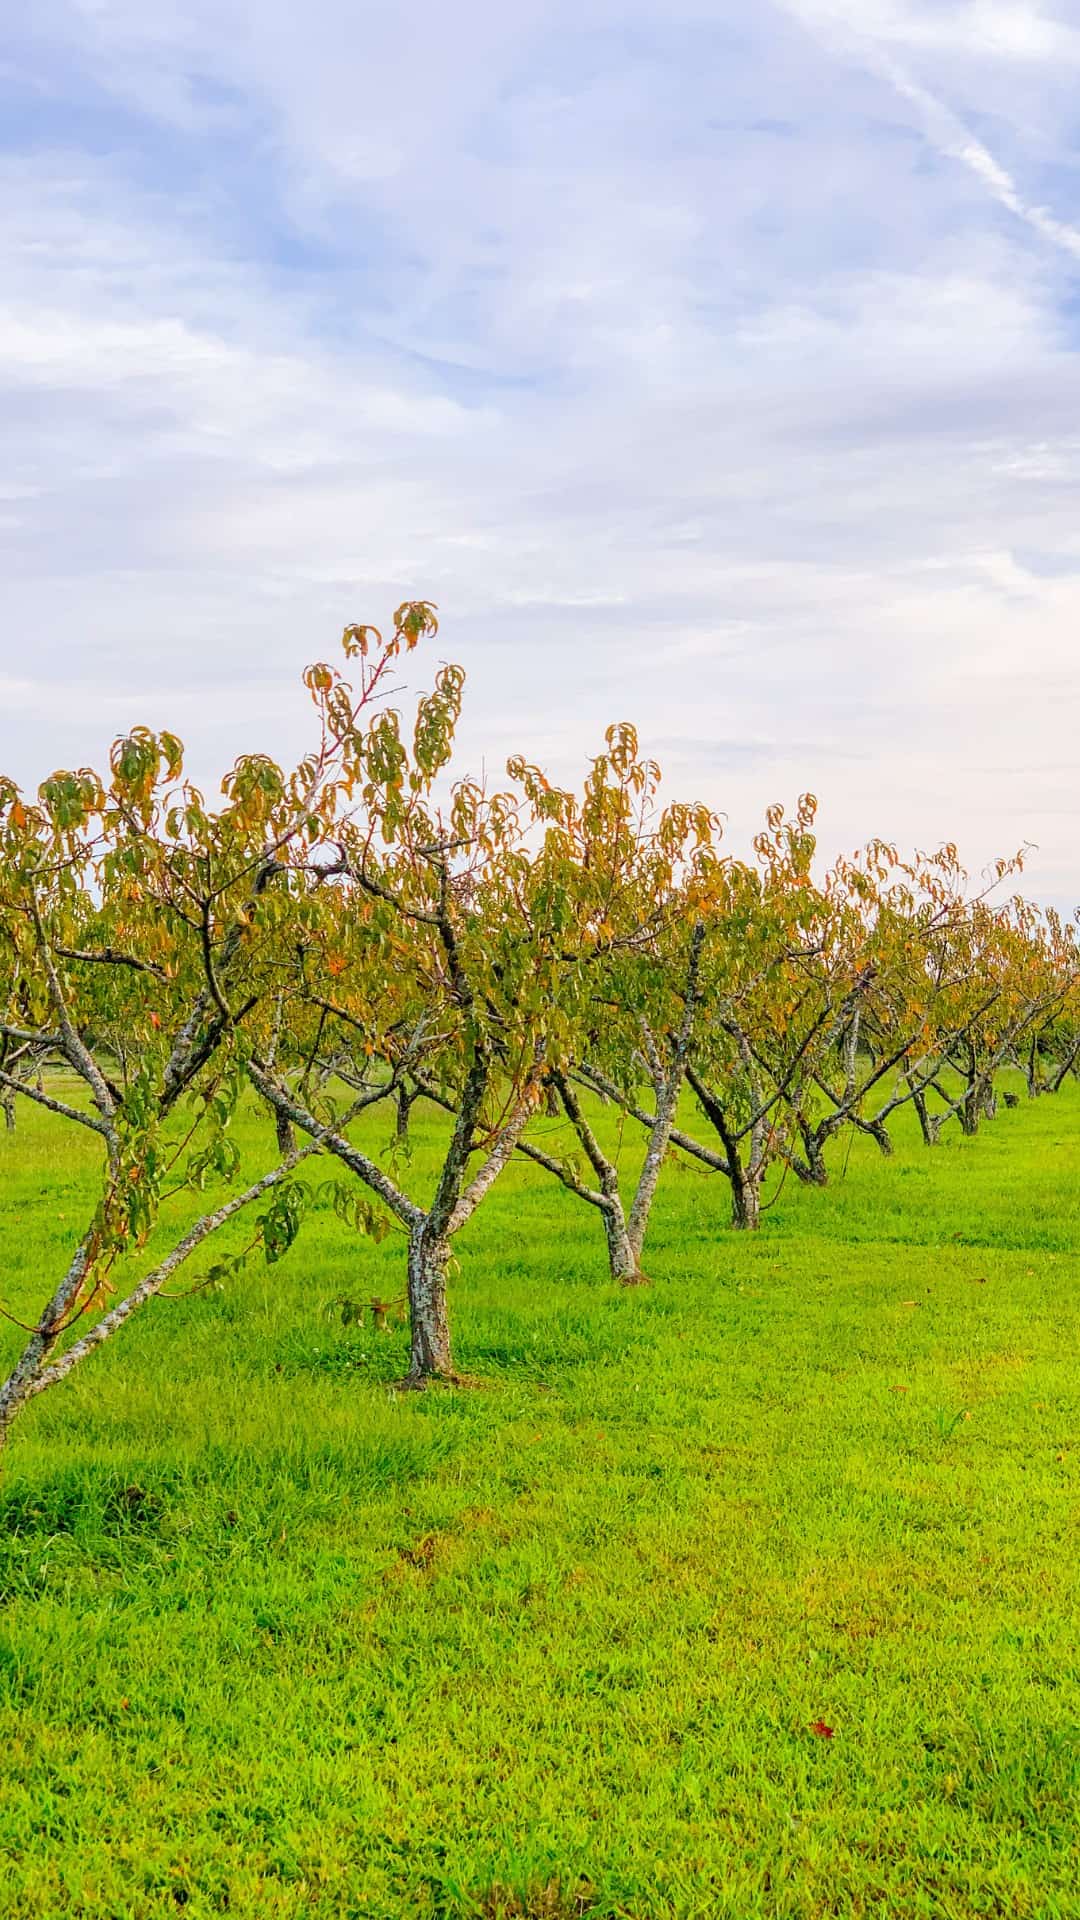 A row of fruit trees in a green field - Farm